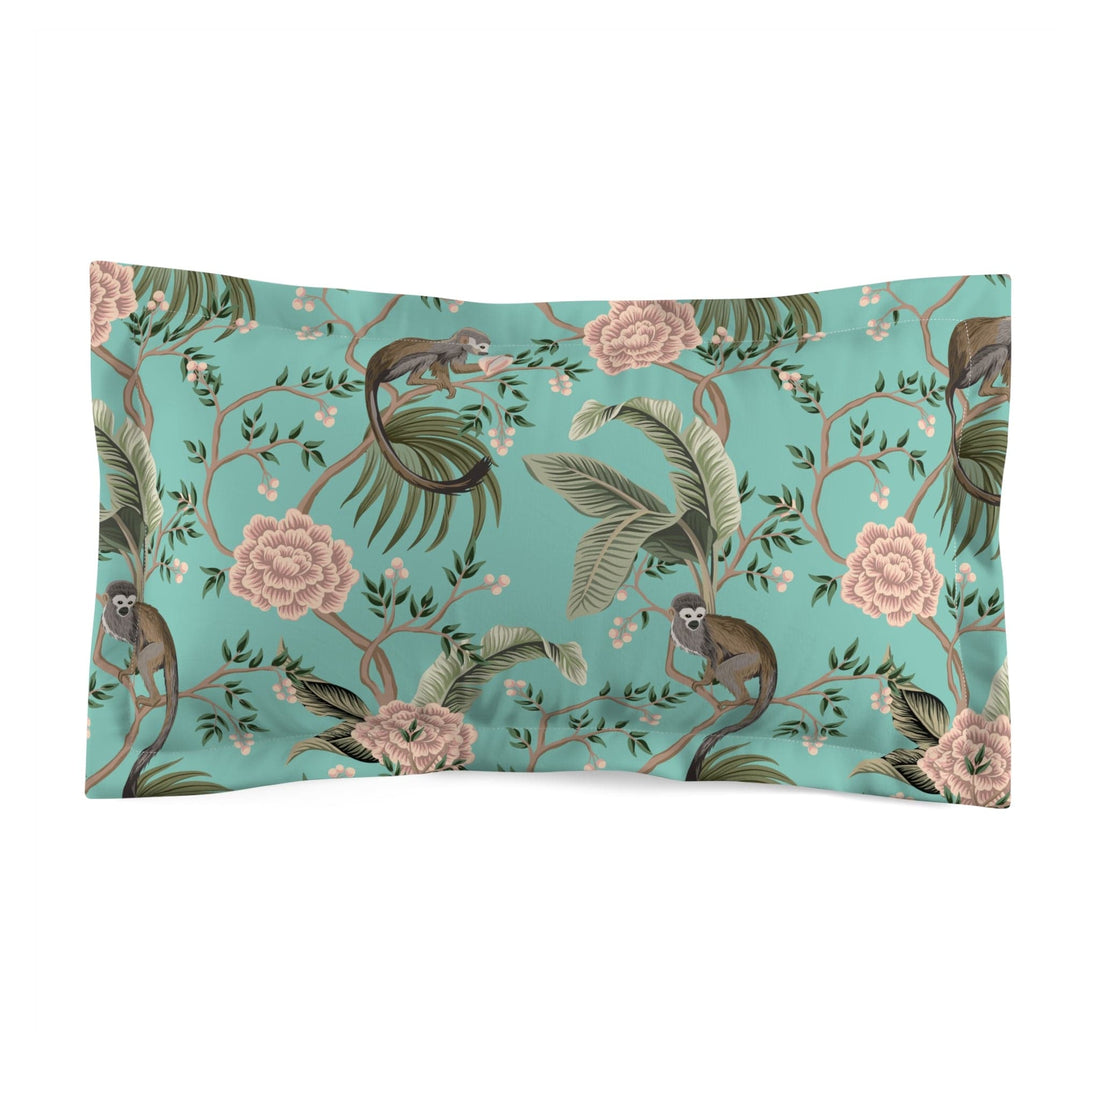 Kate McEnroe New York Chinoiserie Monkey Floral Pillow Sham, Teal Pink Botanical Toile Bedding Pillow Shams King 18442100797502534805